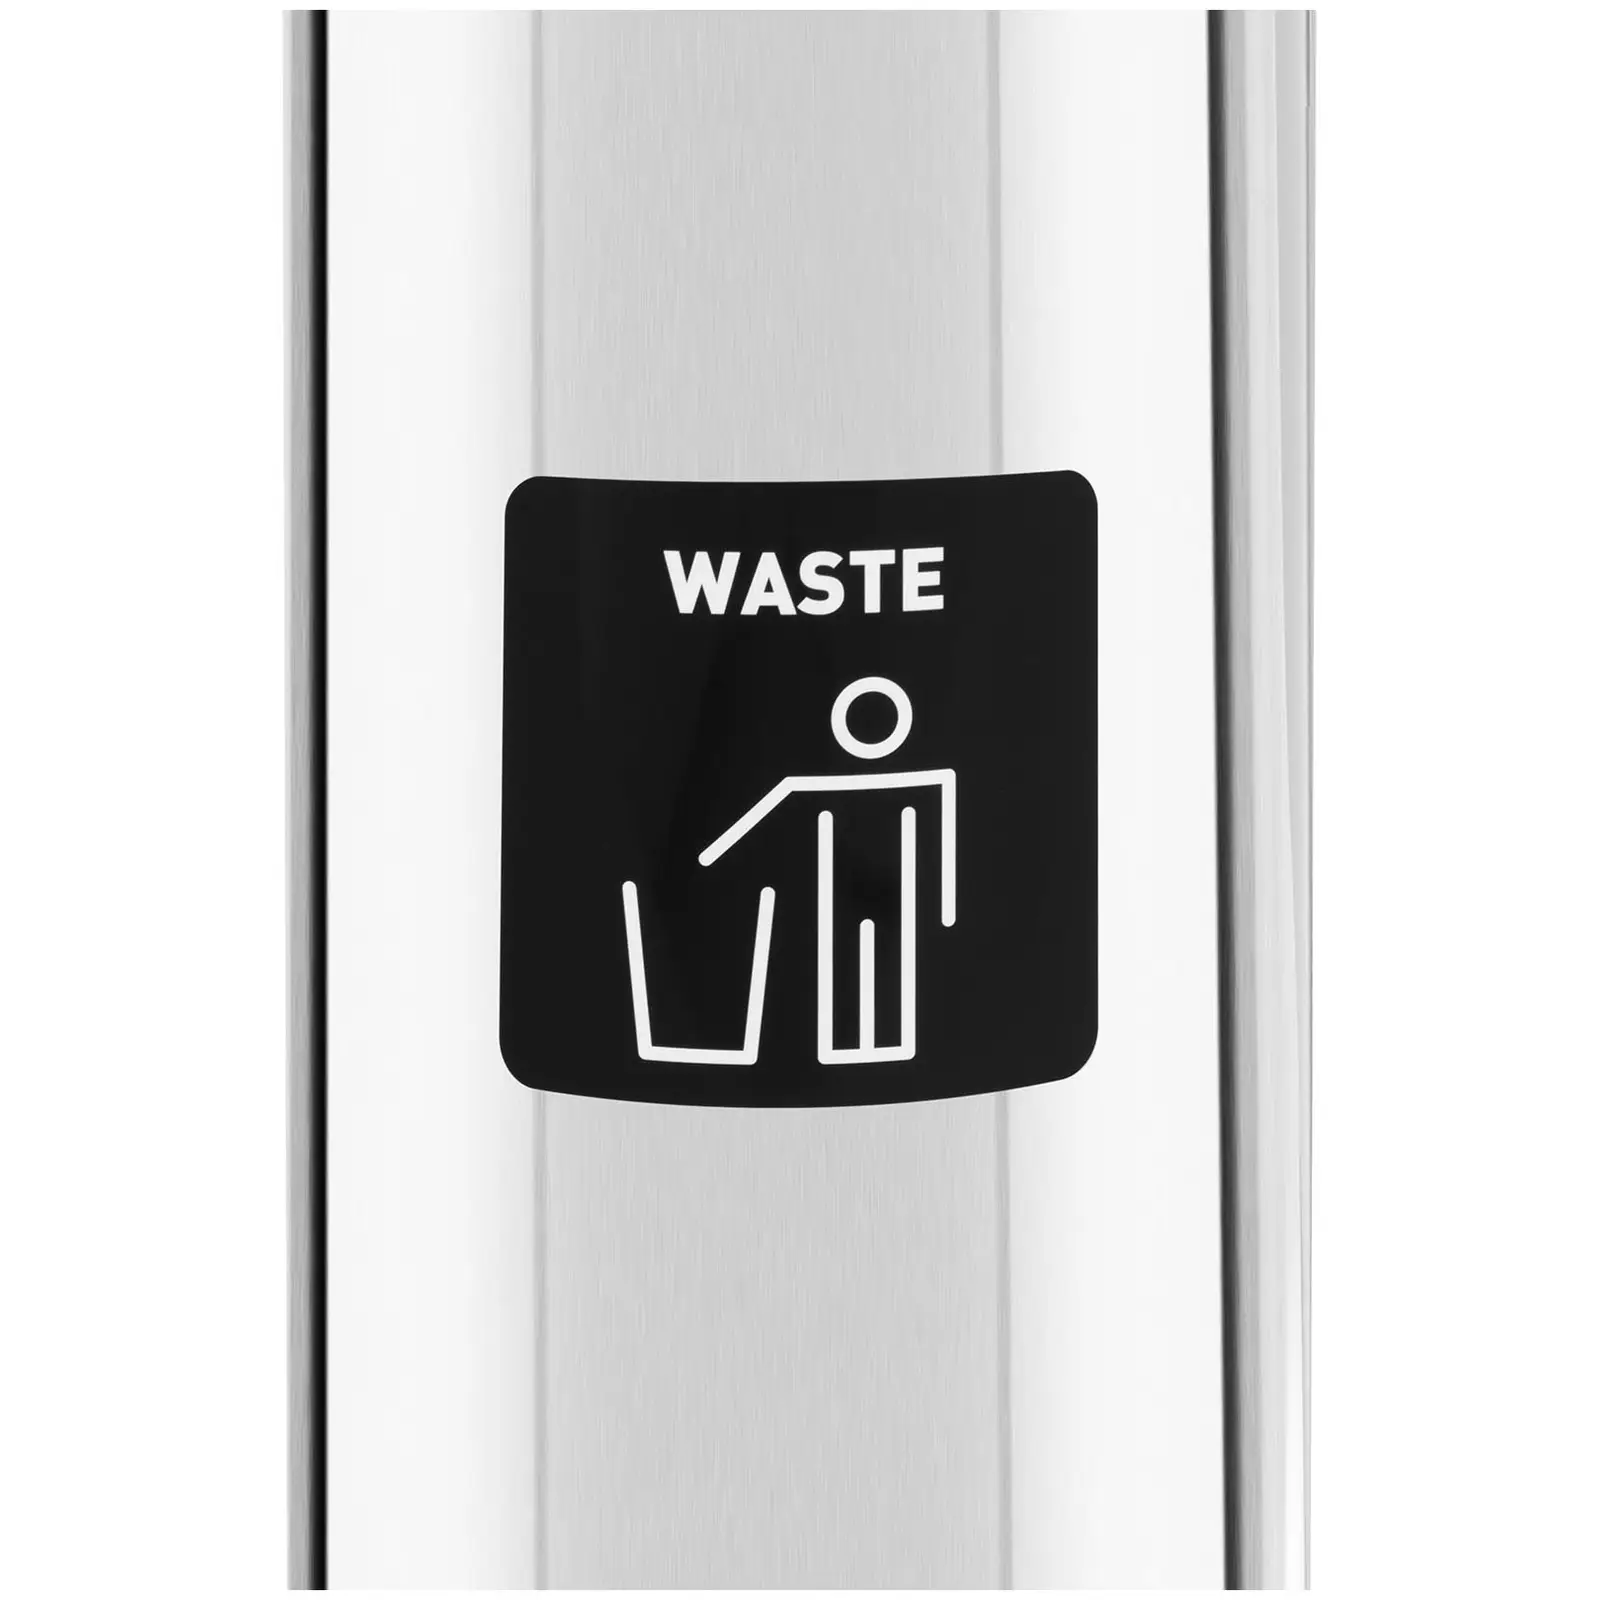 Waste Bin - 45 L - chrome - non-recyclable waste label